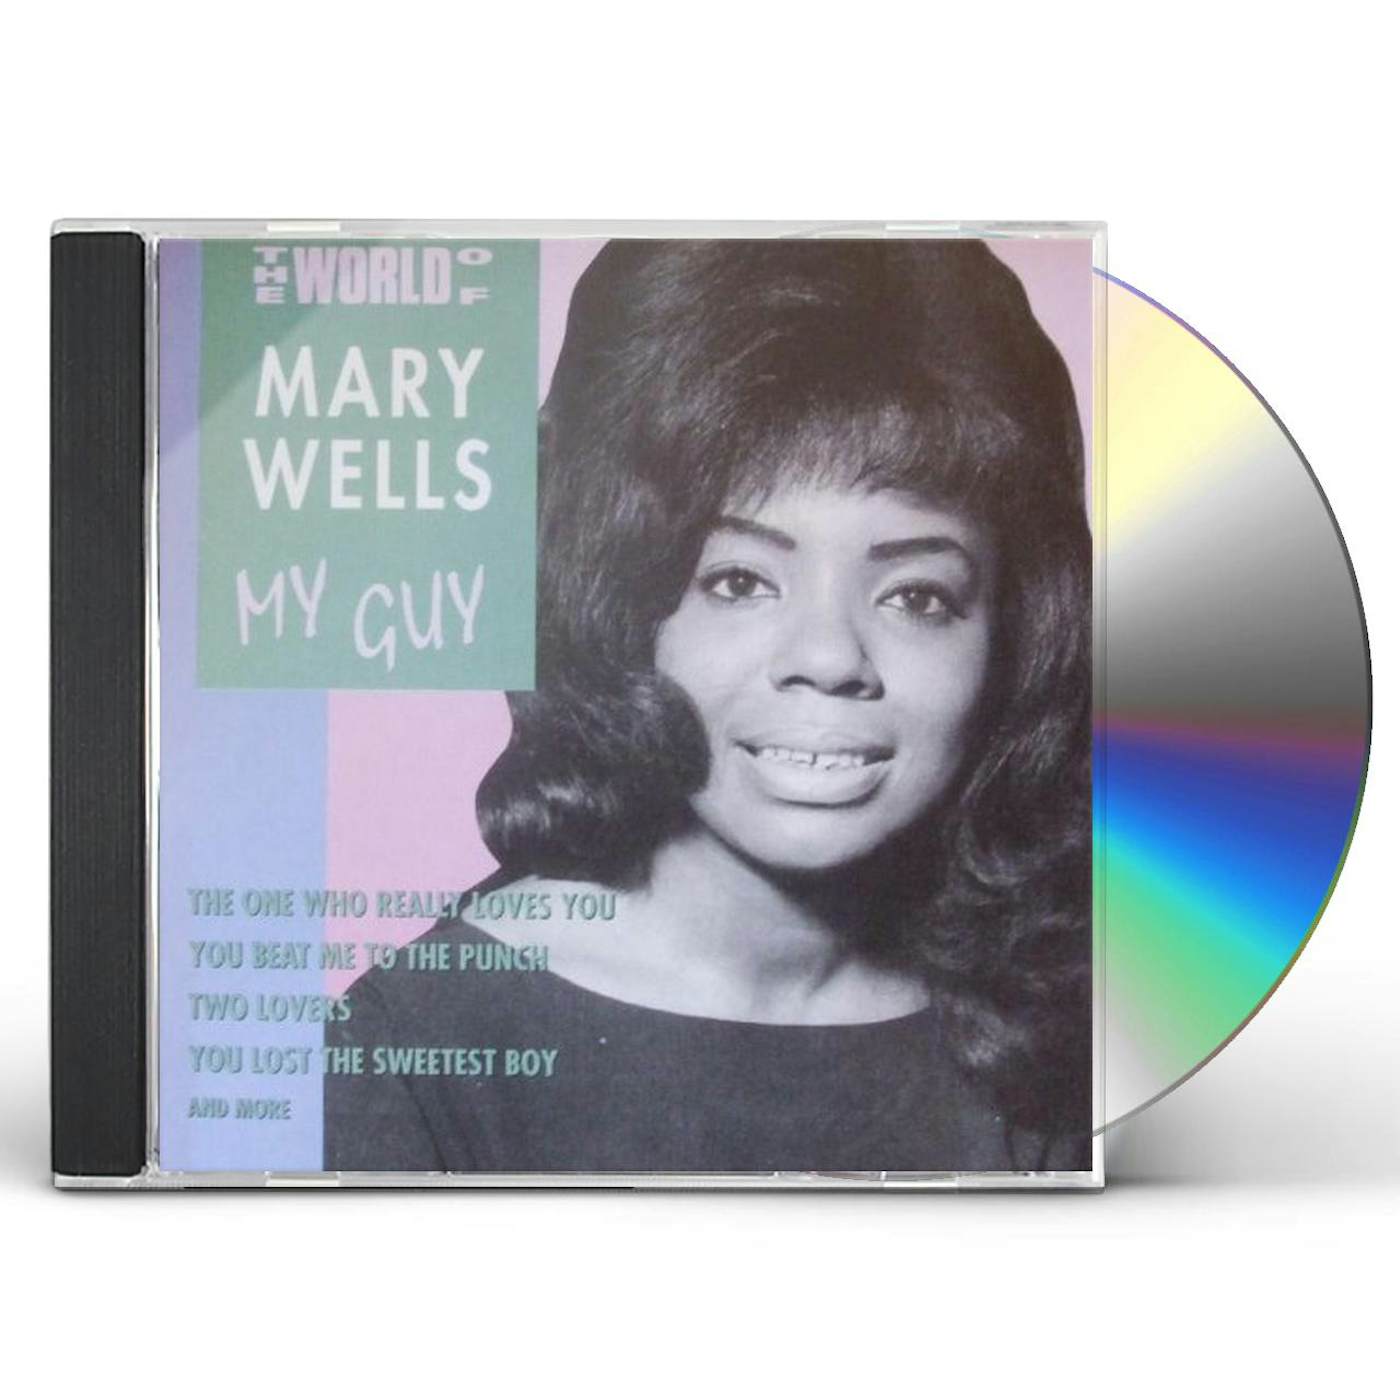 Mary Wells MY GUY CD